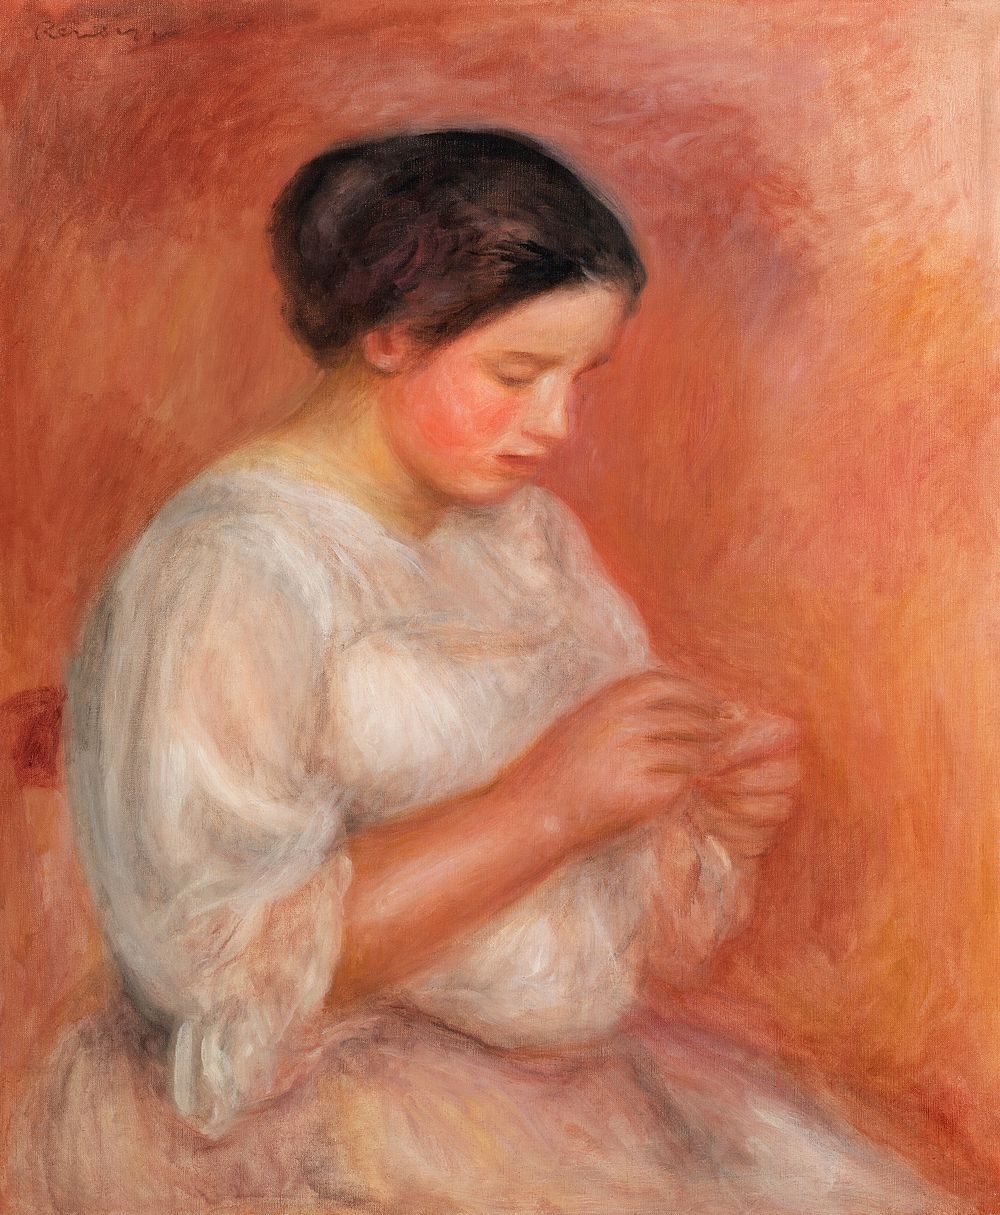 Woman Sewing (1908) by Pierre-Auguste Renoir. Original from Barnes Foundation. Digitally enhanced by rawpixel.